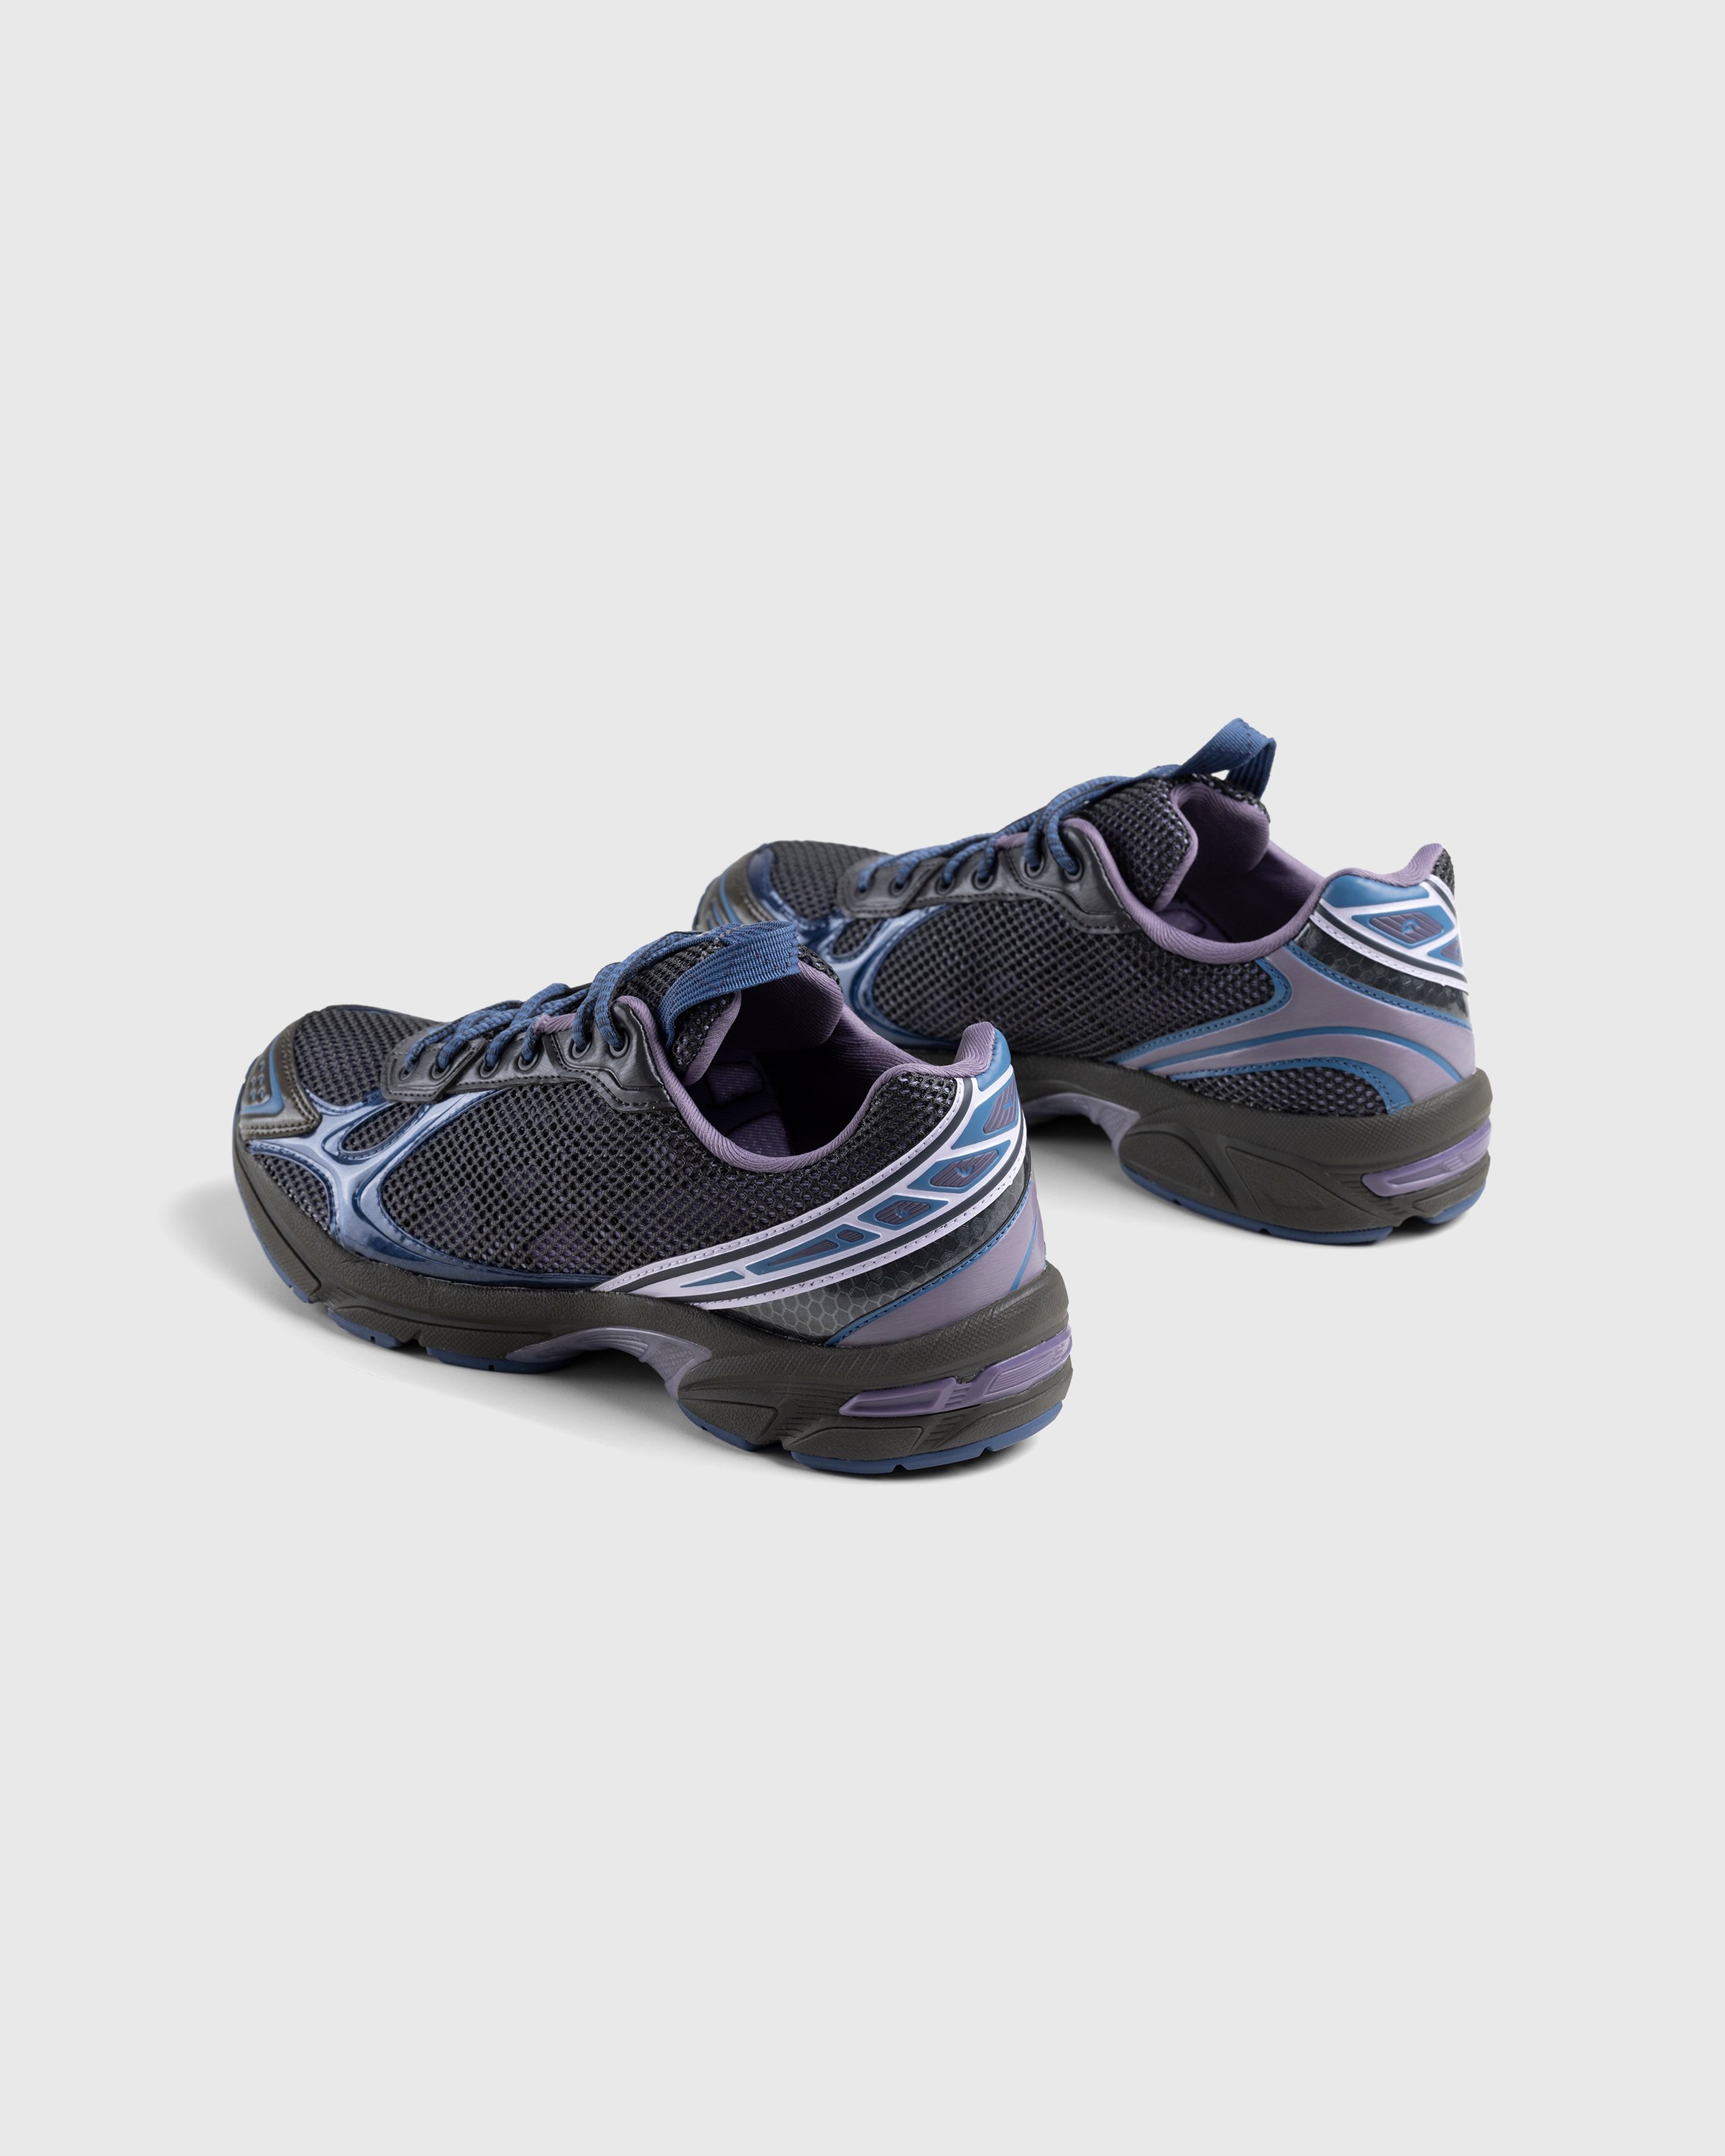 asics - UB4-S Gel-1130 Graphite Grey/Grand Shark - Footwear - Black - Image 5